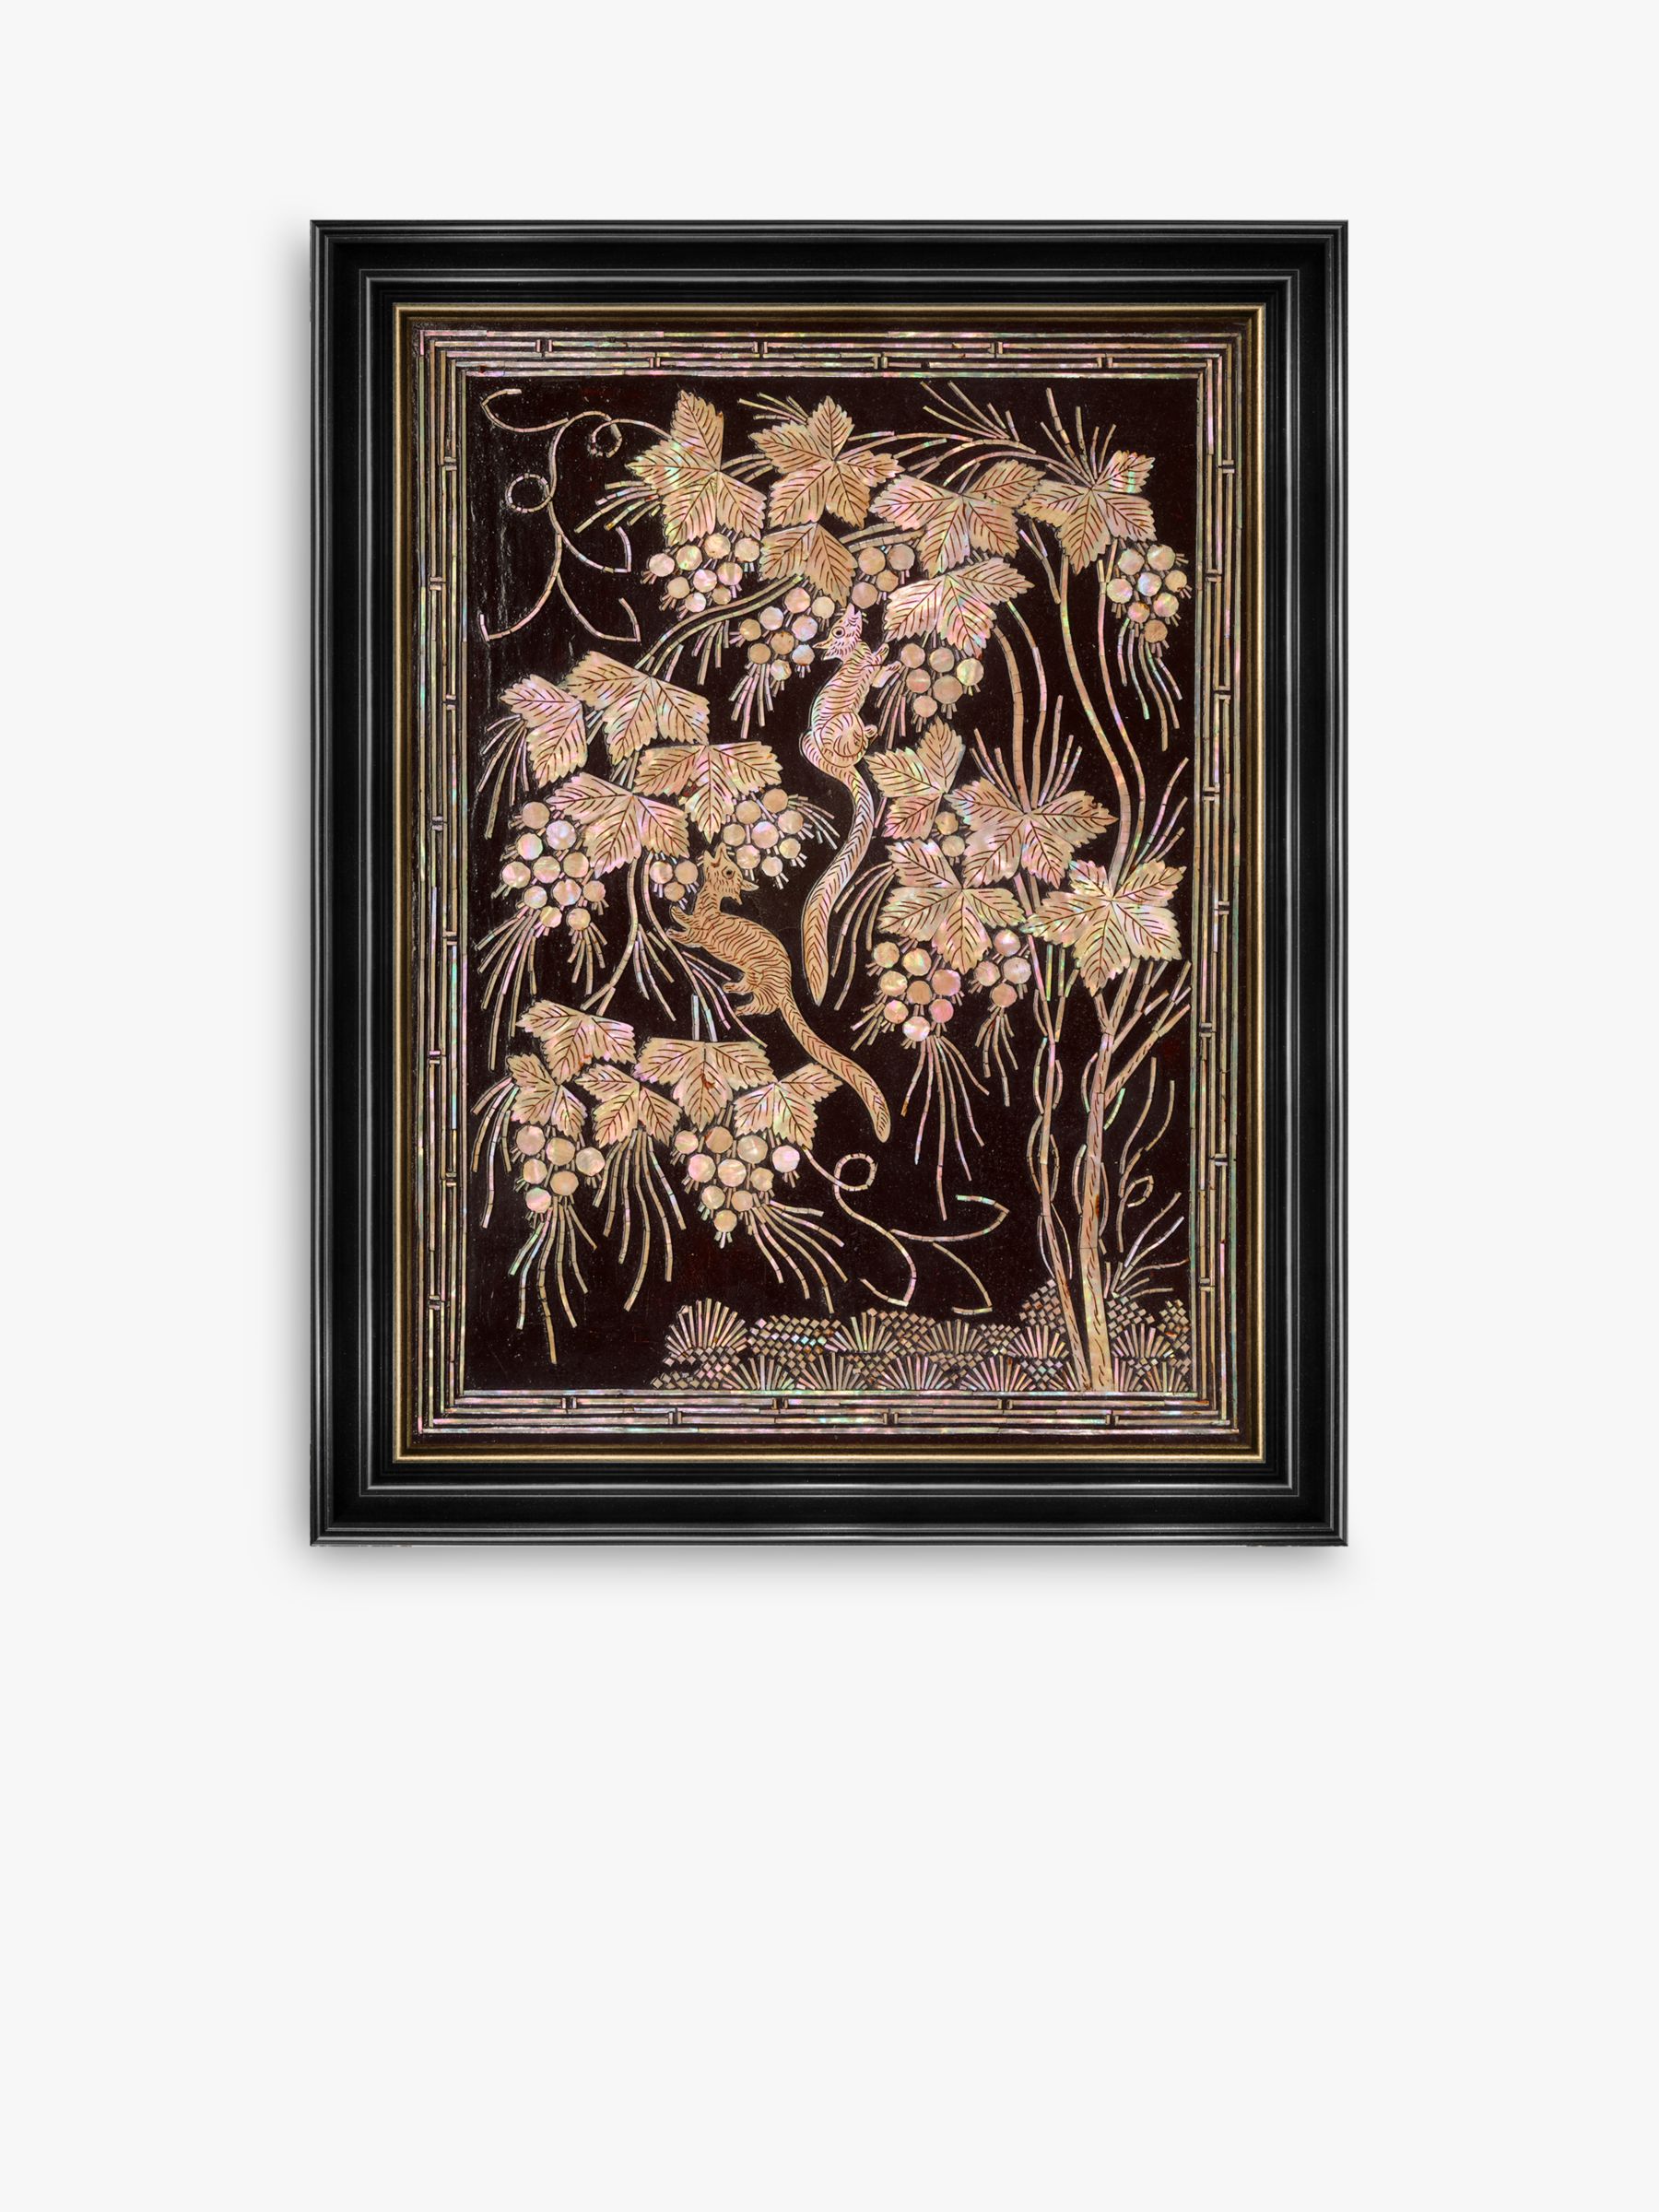 British Museum - Joseon Dynasty Korea Plaque 2 Framed Print, 92 x 72cm ...